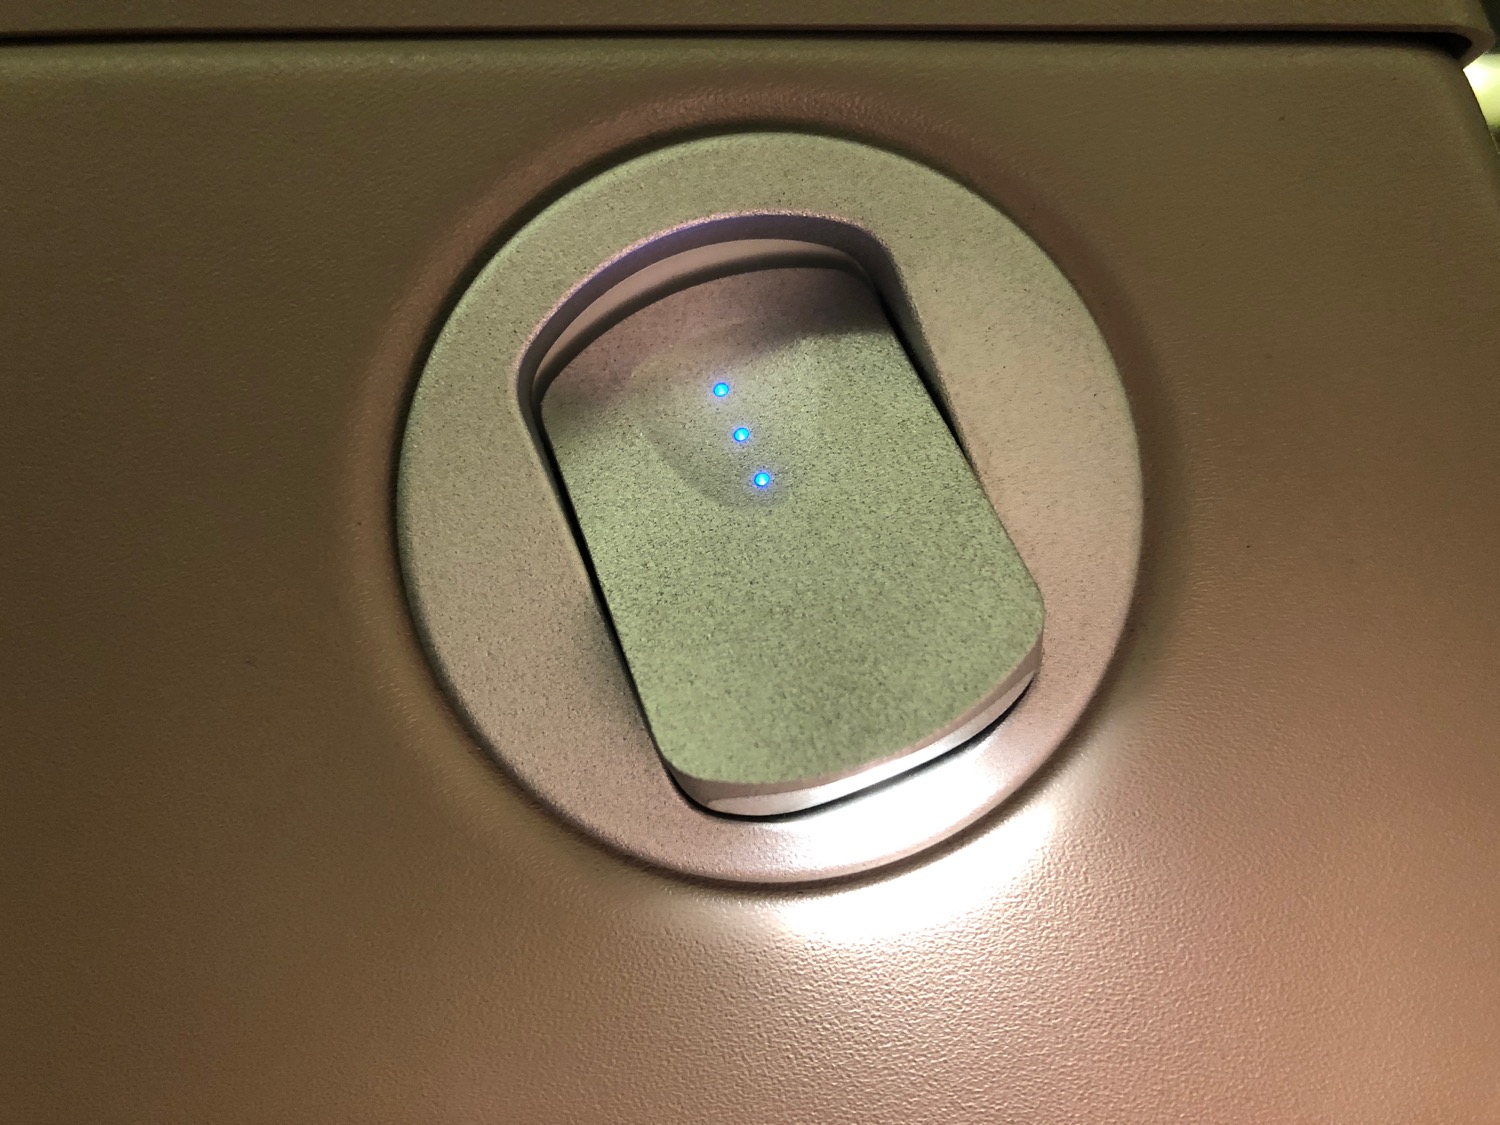 a close up of a fingerprint scanner